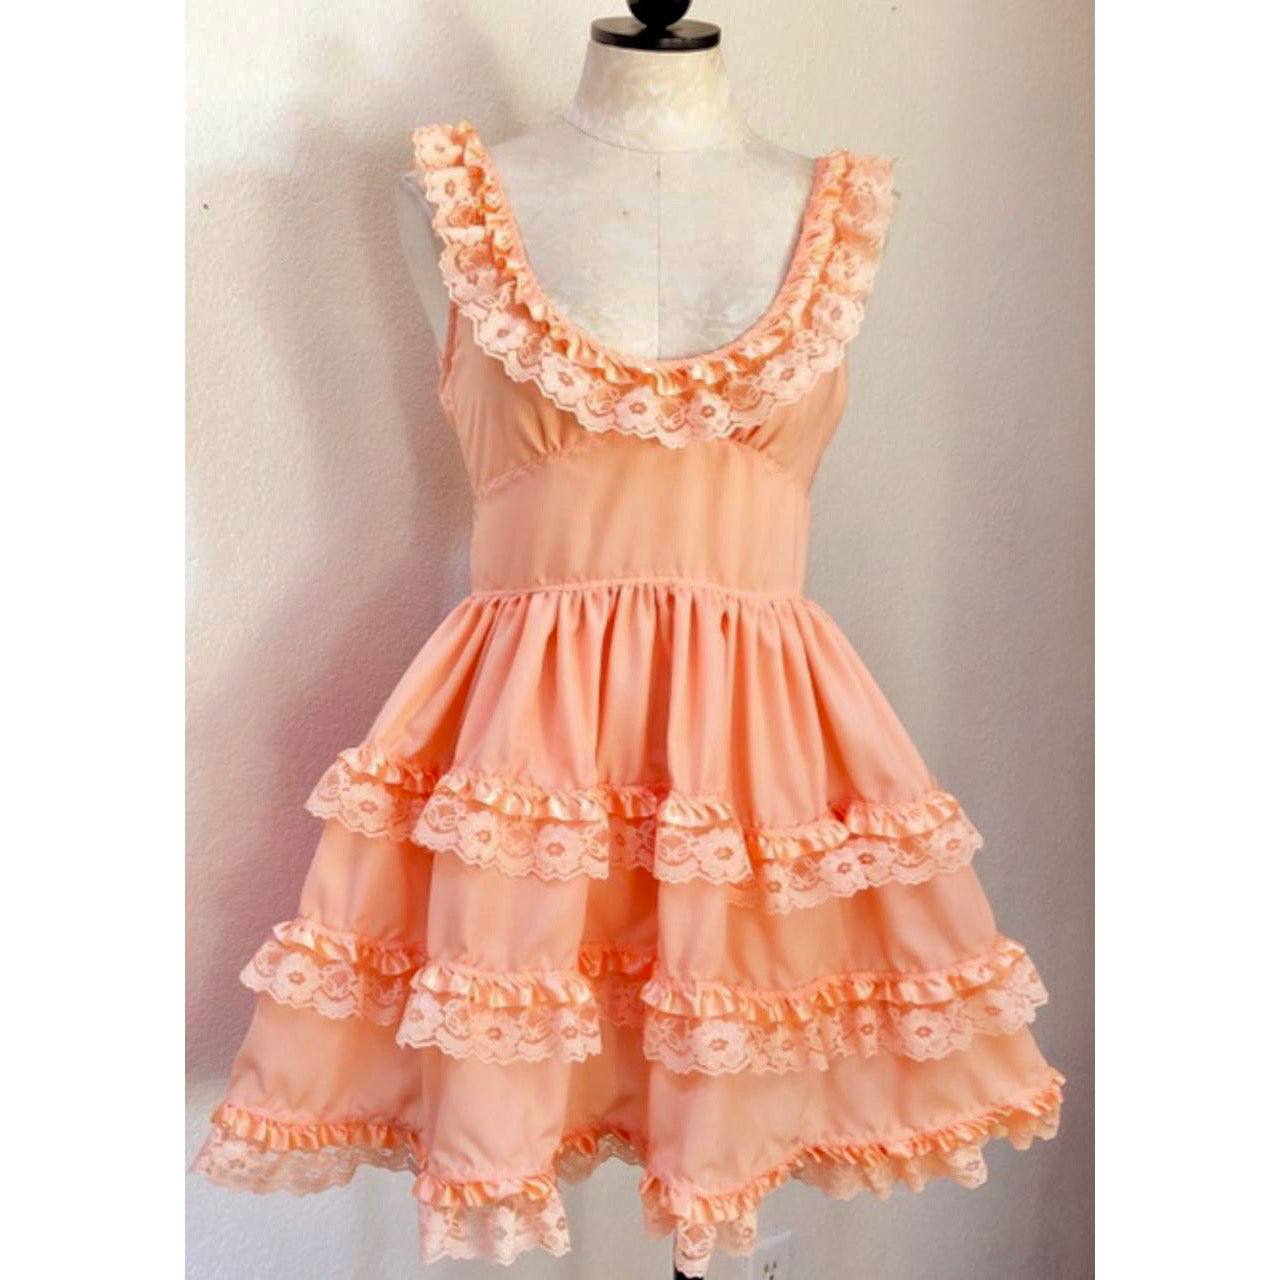 The Sleeveless Cupcake Dress in Peach